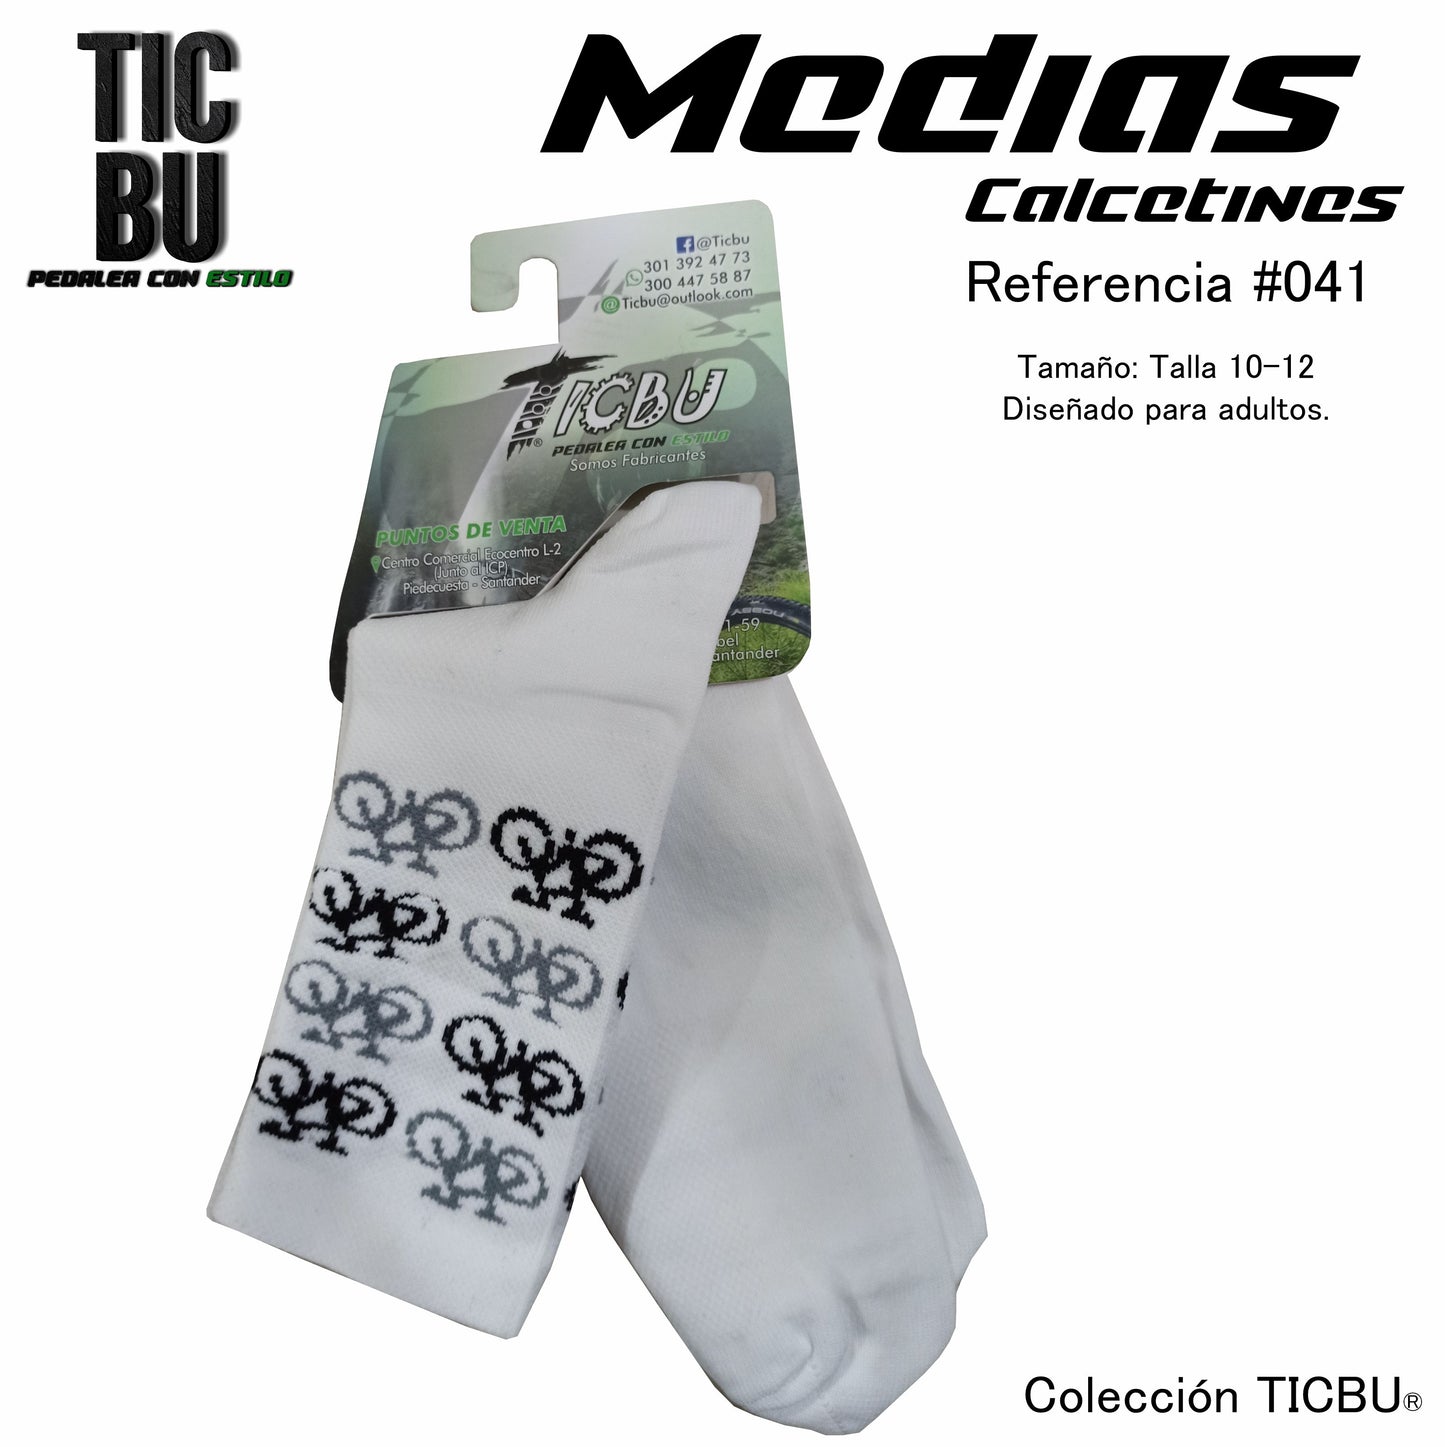 TICBU socks Ref 041